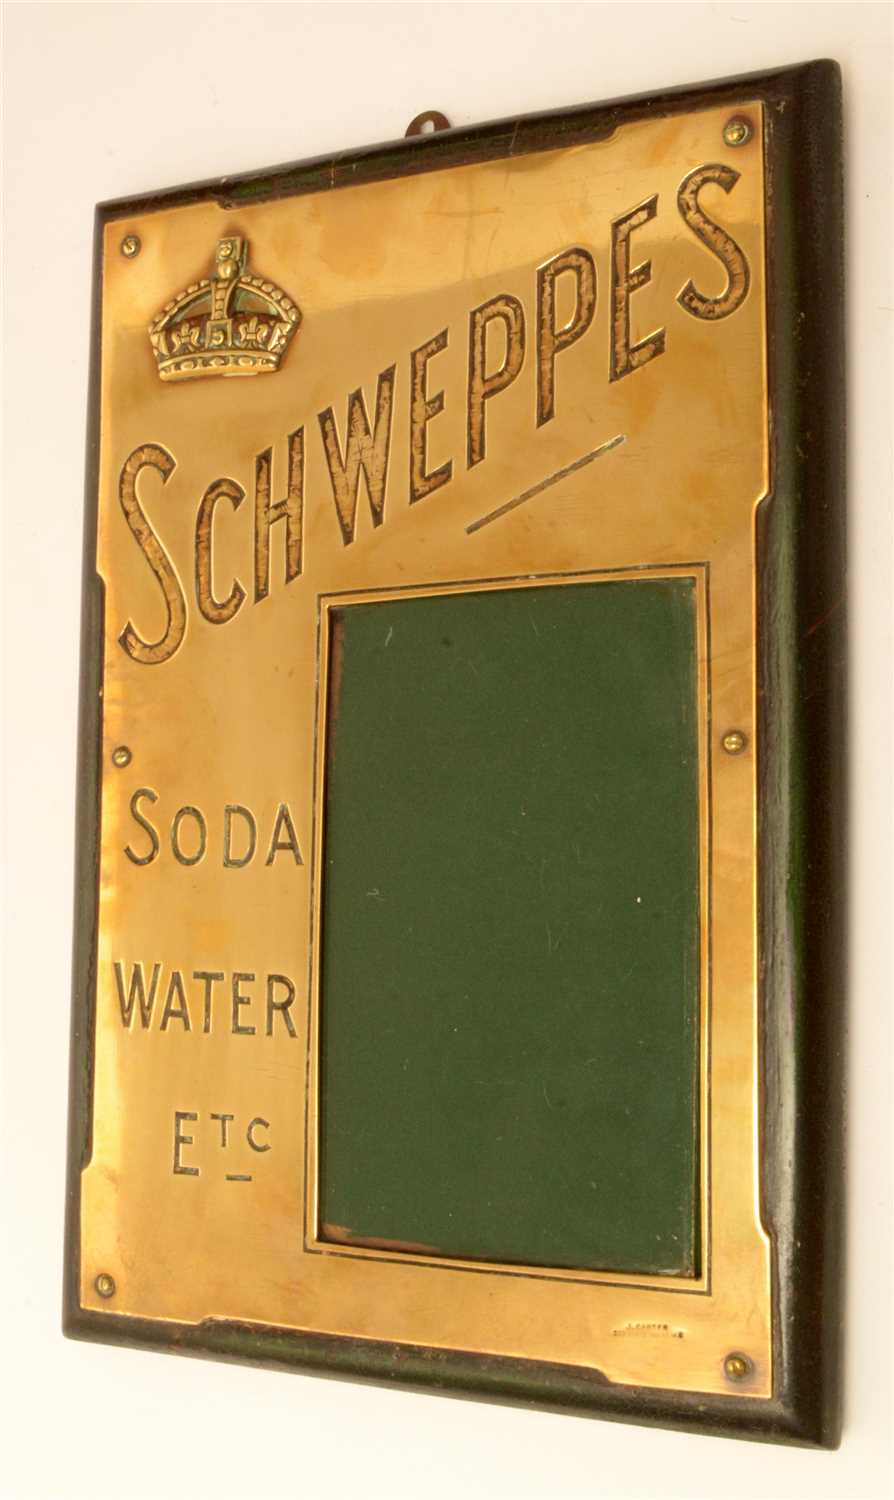 Lot 1419 - Schweppes soda water, etc.